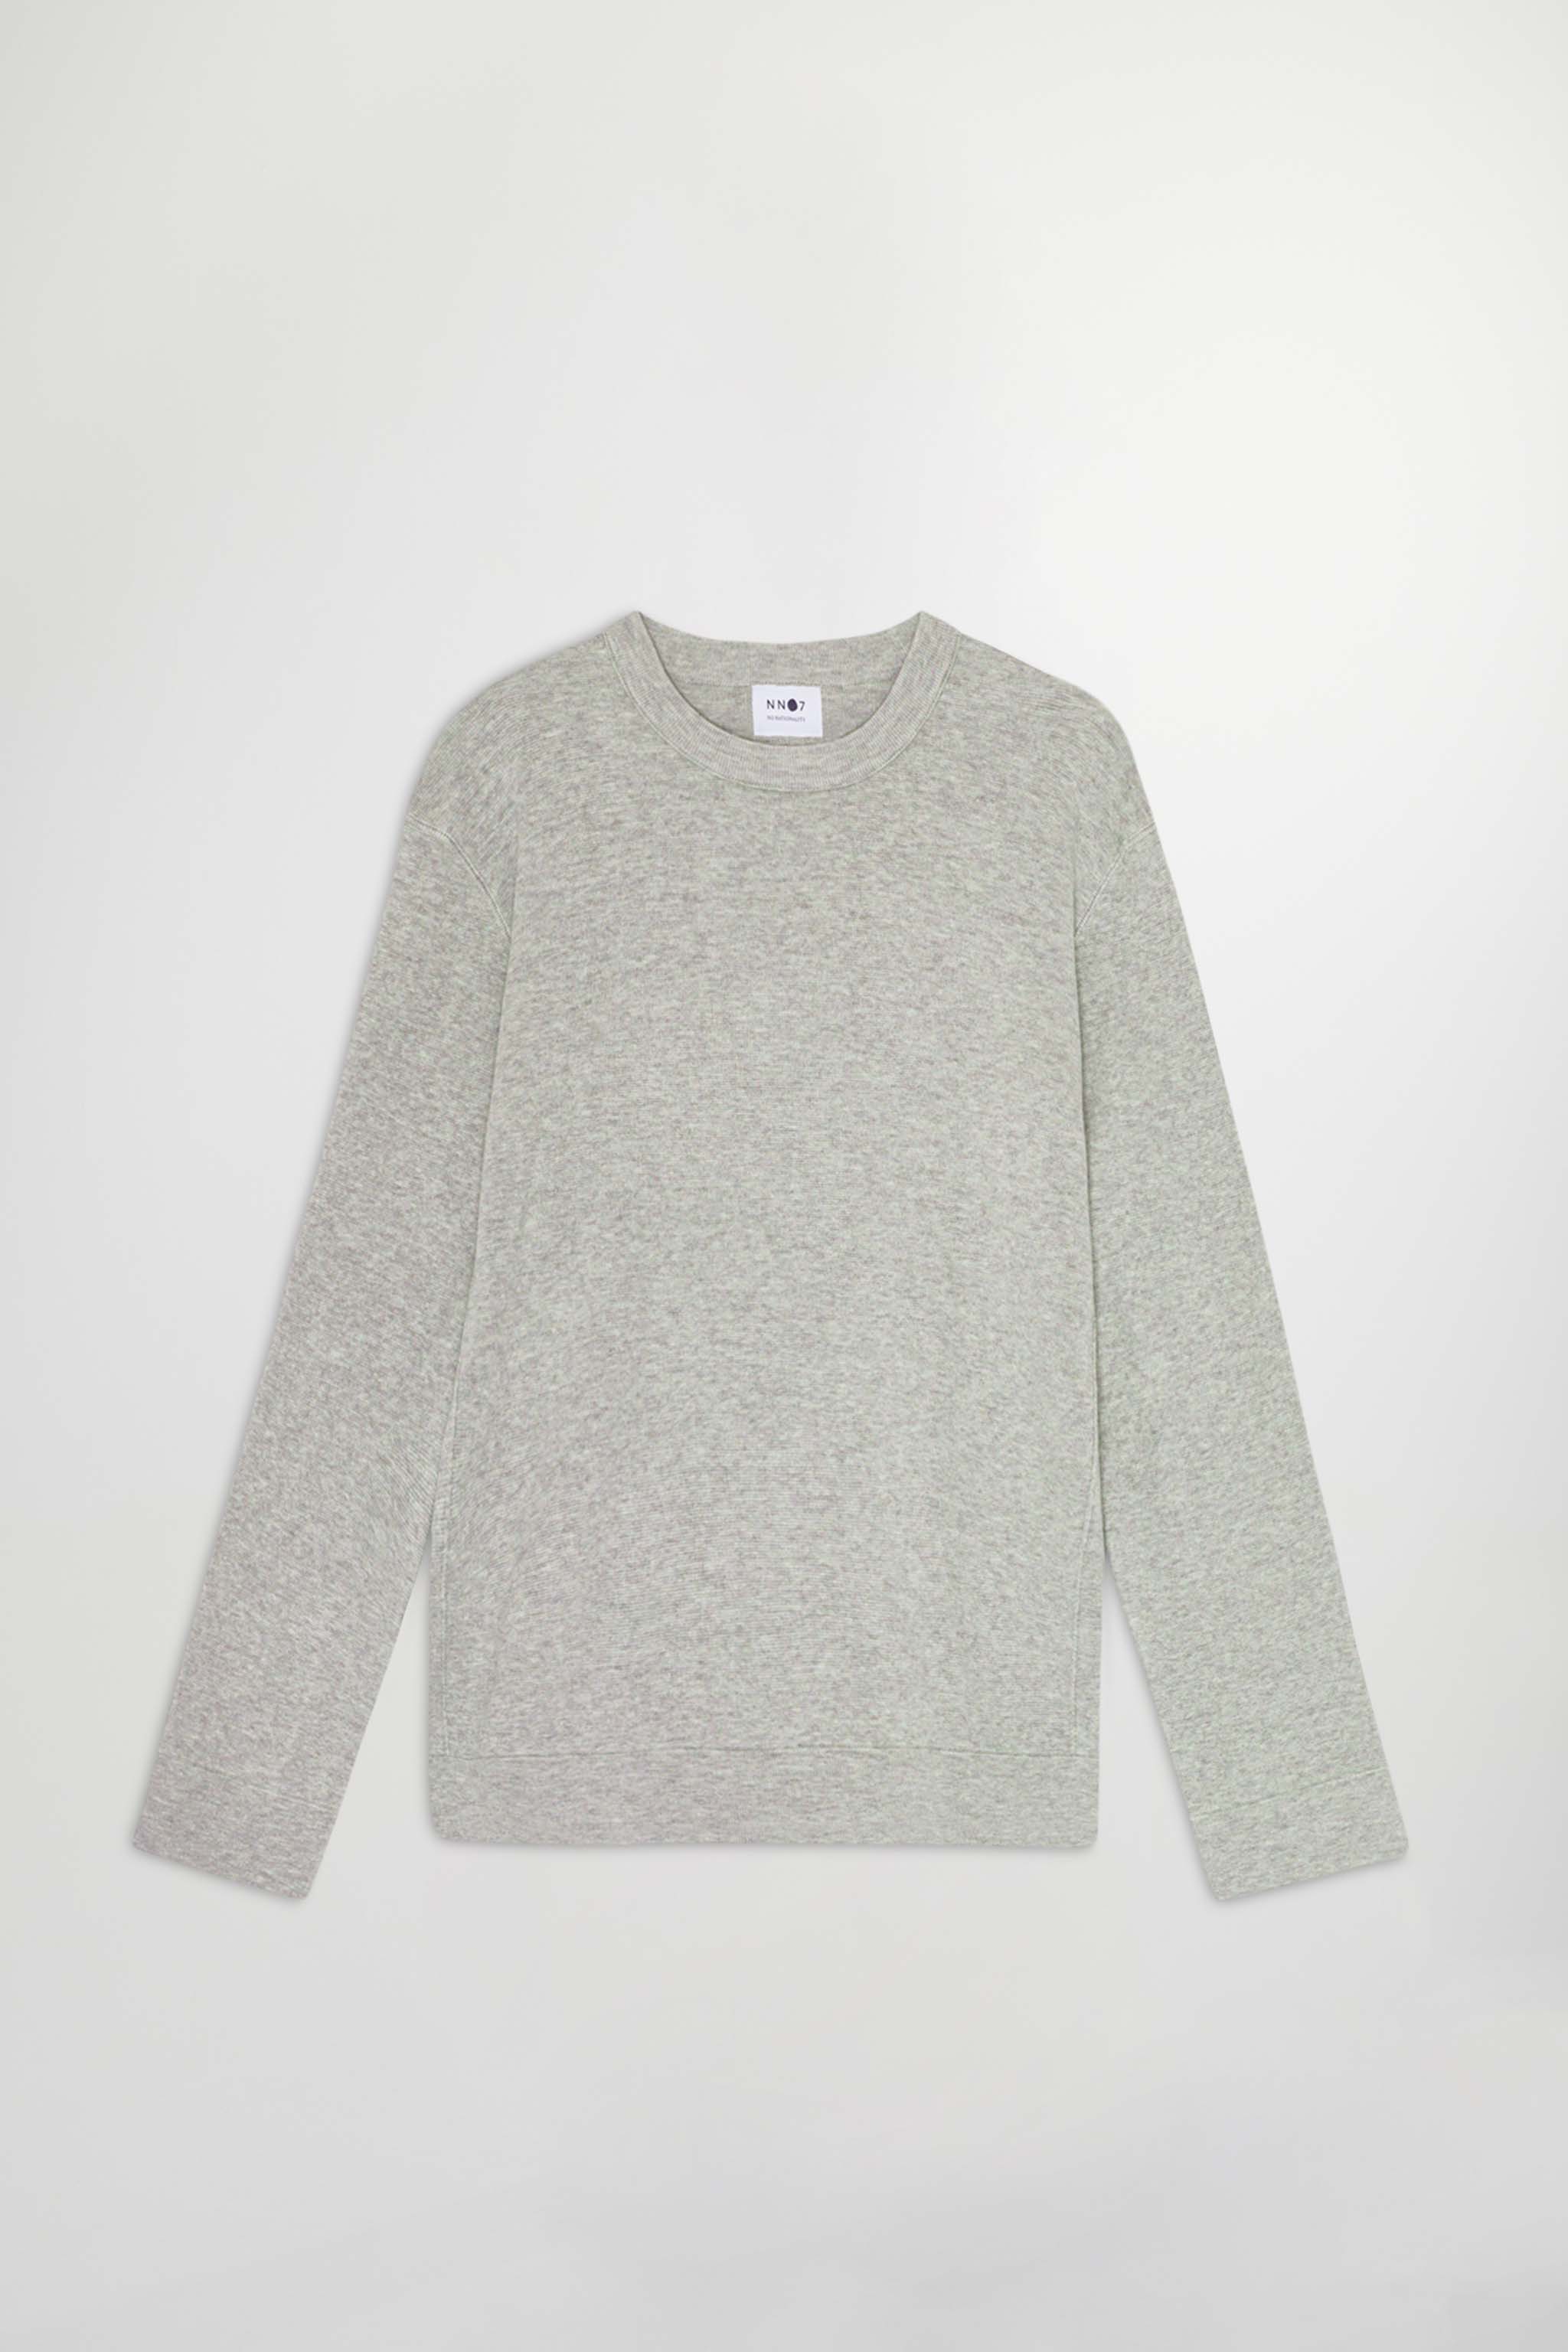 Luis 6430 men's sweater - Grey - Buy online at NN.07®